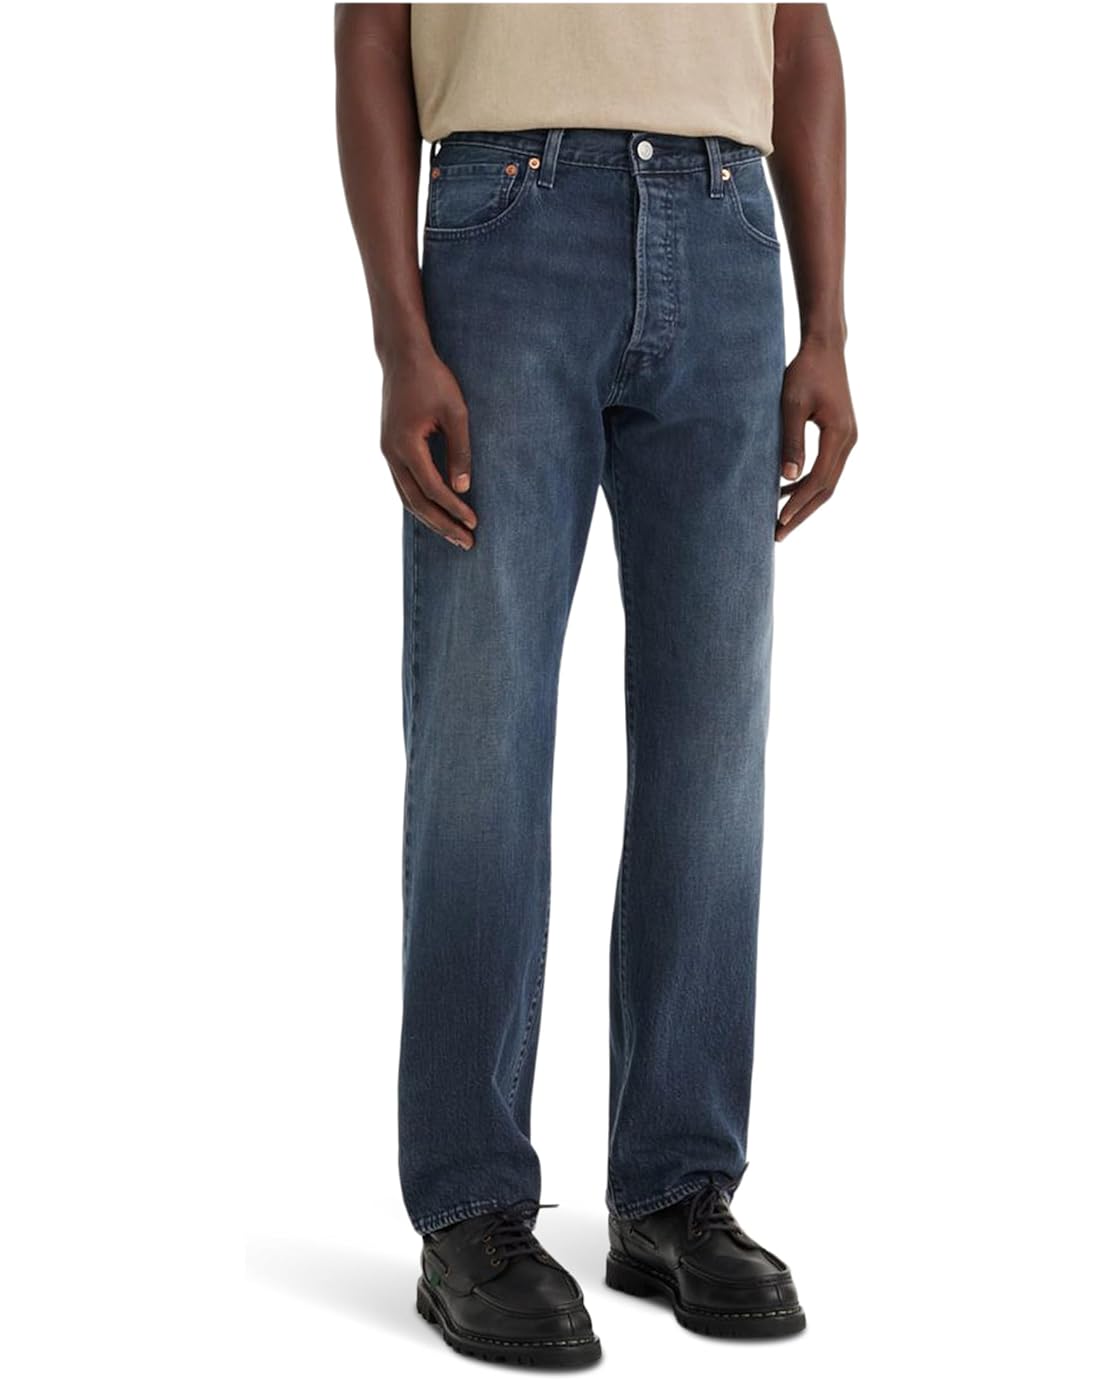 Levis Premium 501 93 Straight Jeans